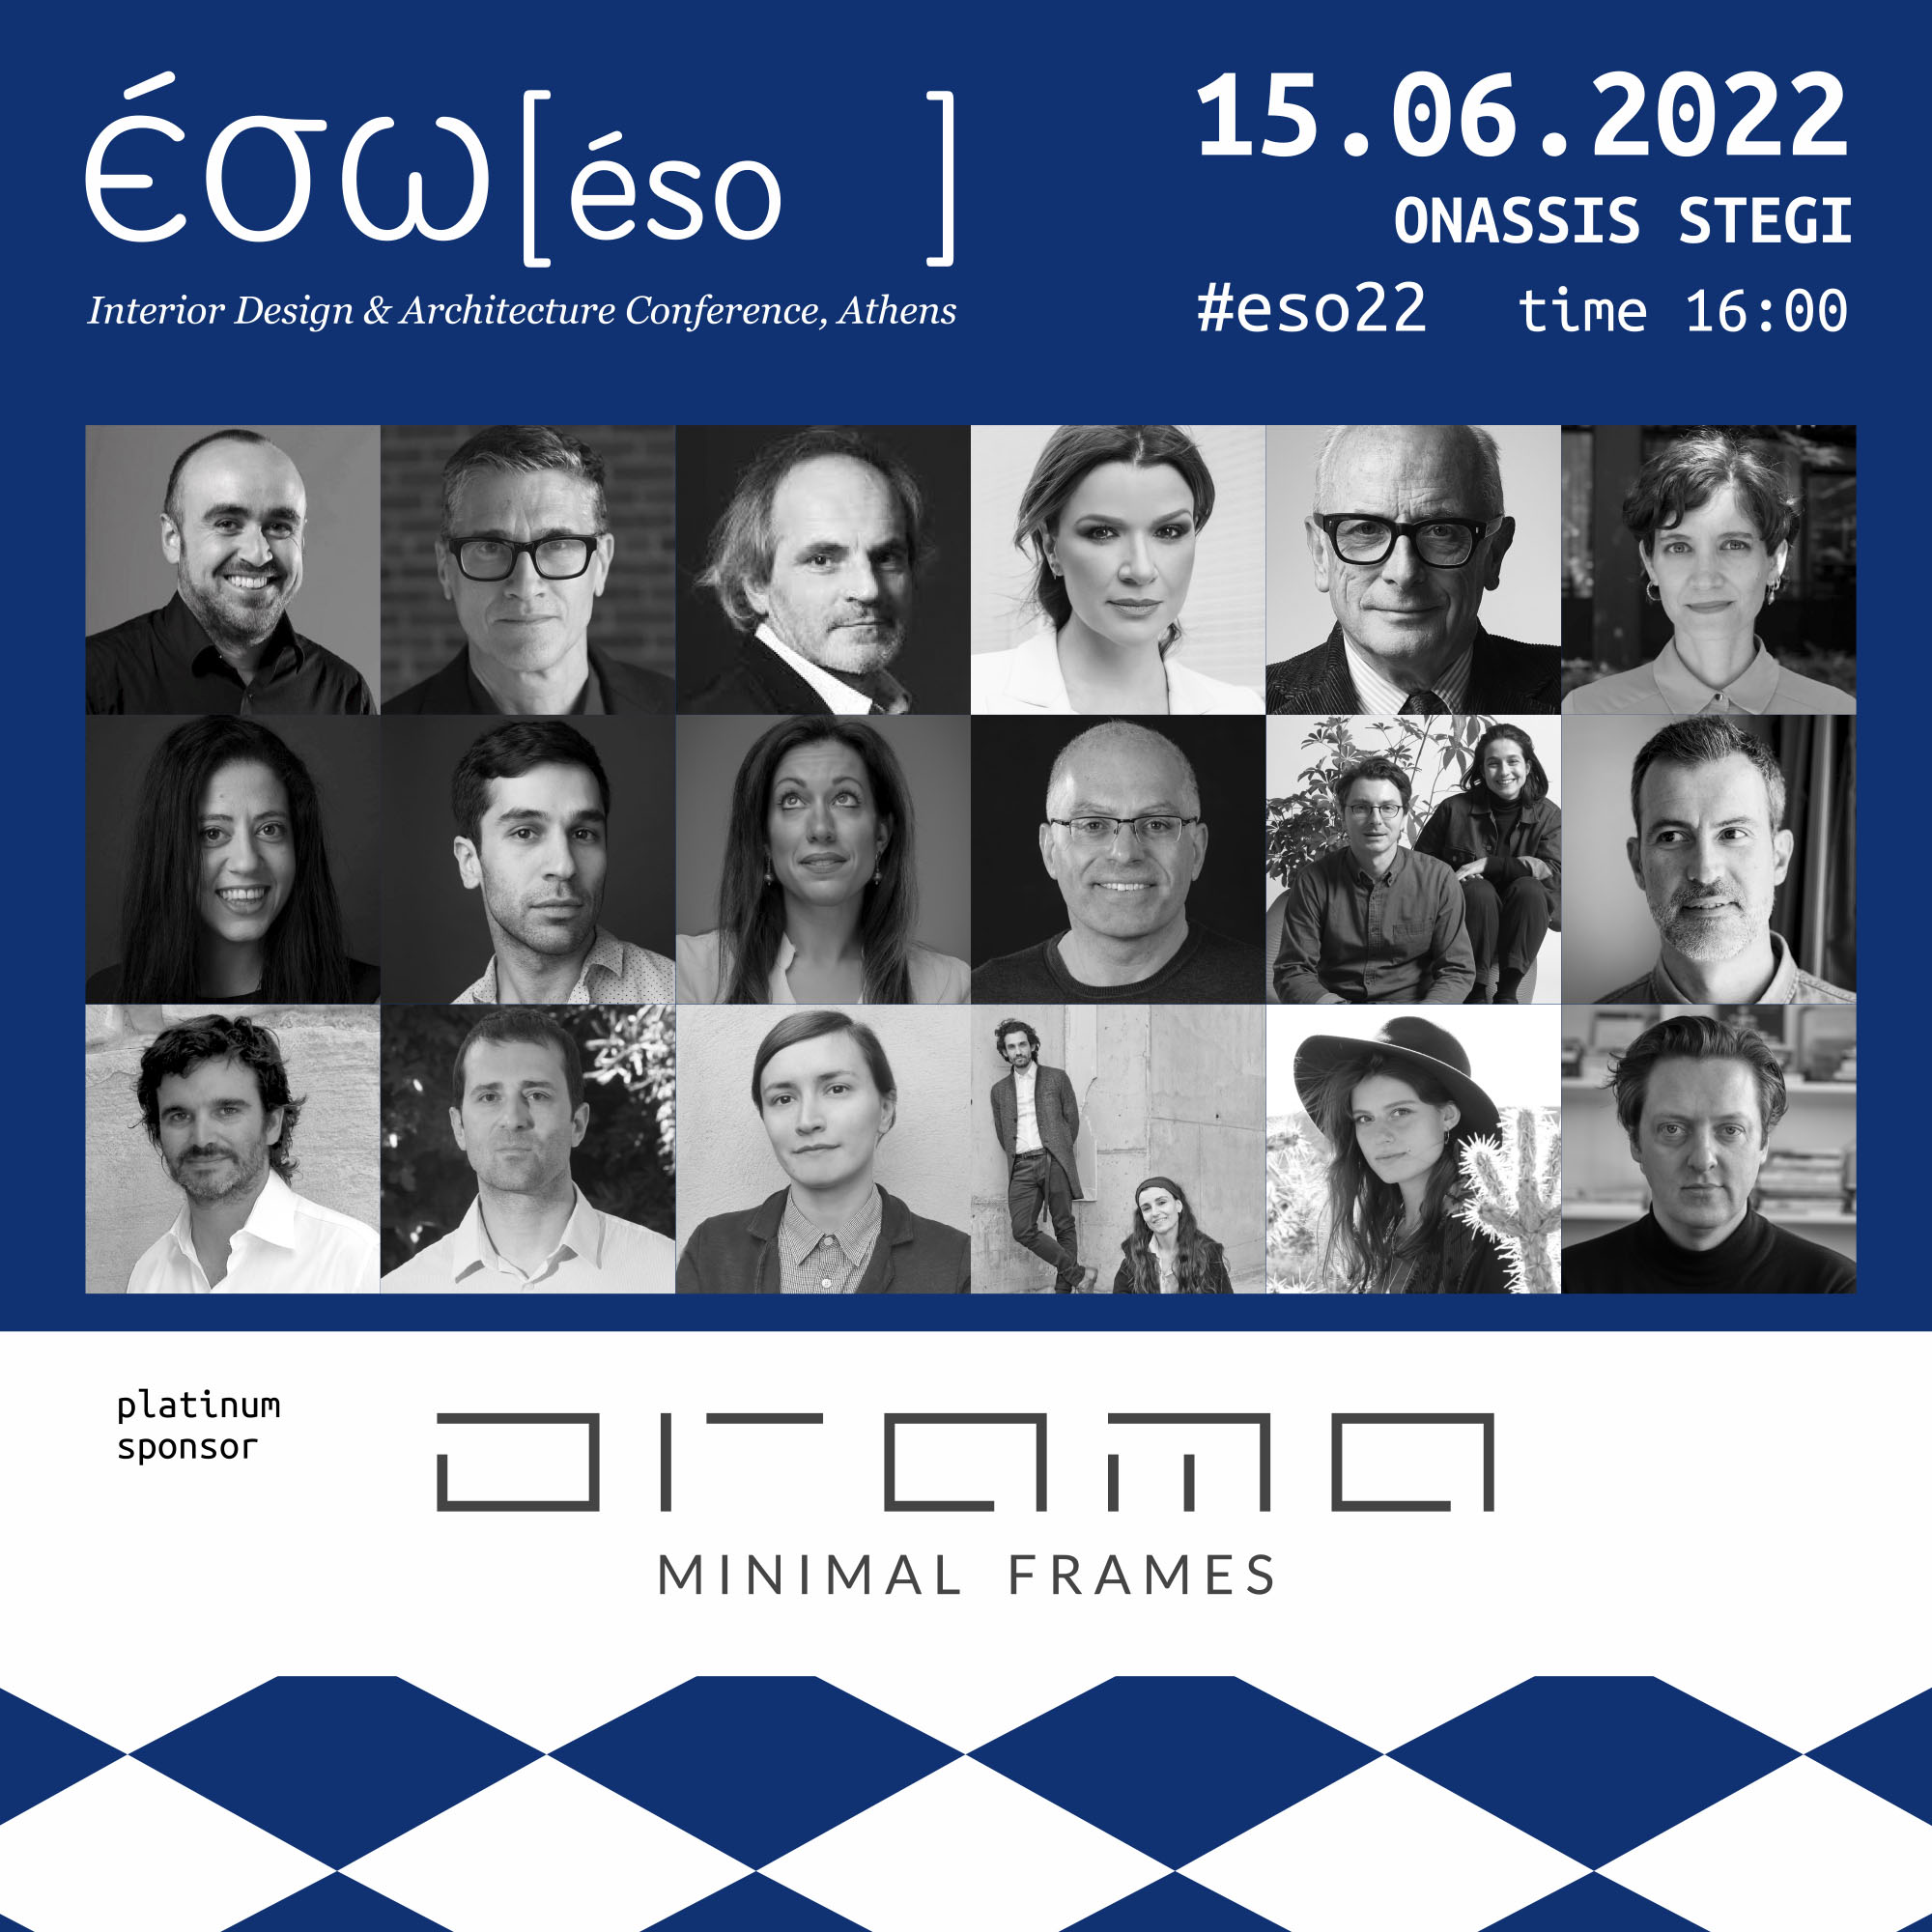 ORAMA is Platinum Sponsor at ESO 2022 Conference